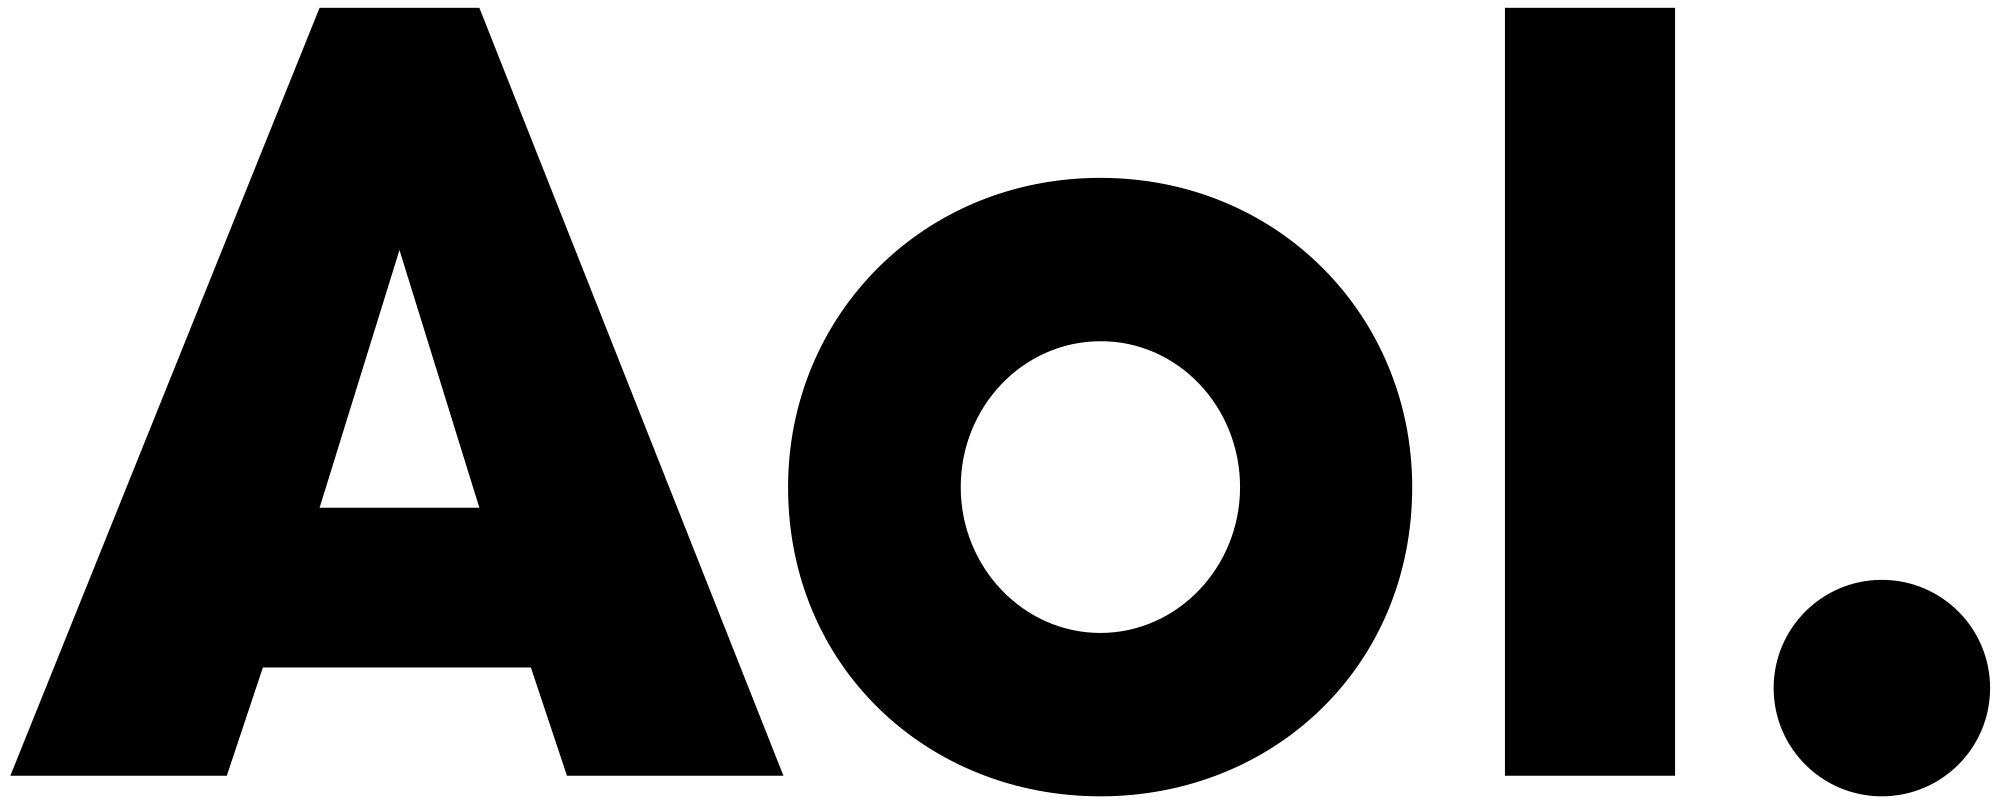 2000px-AOL_logo.svg.png